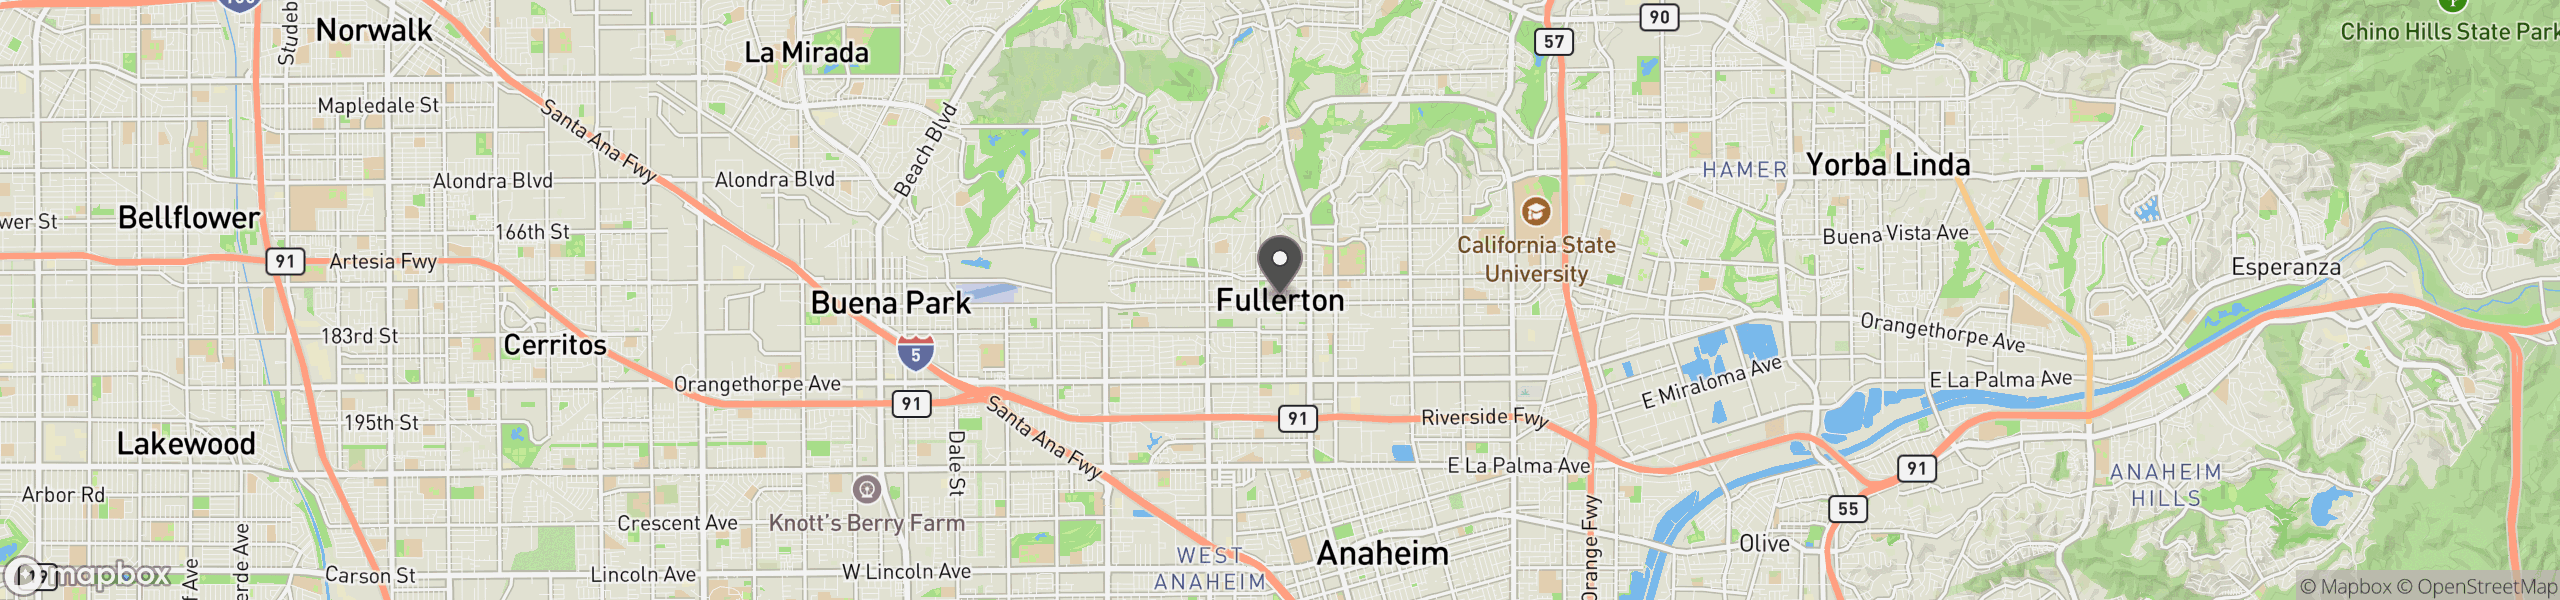 Fullerton, CA 92837